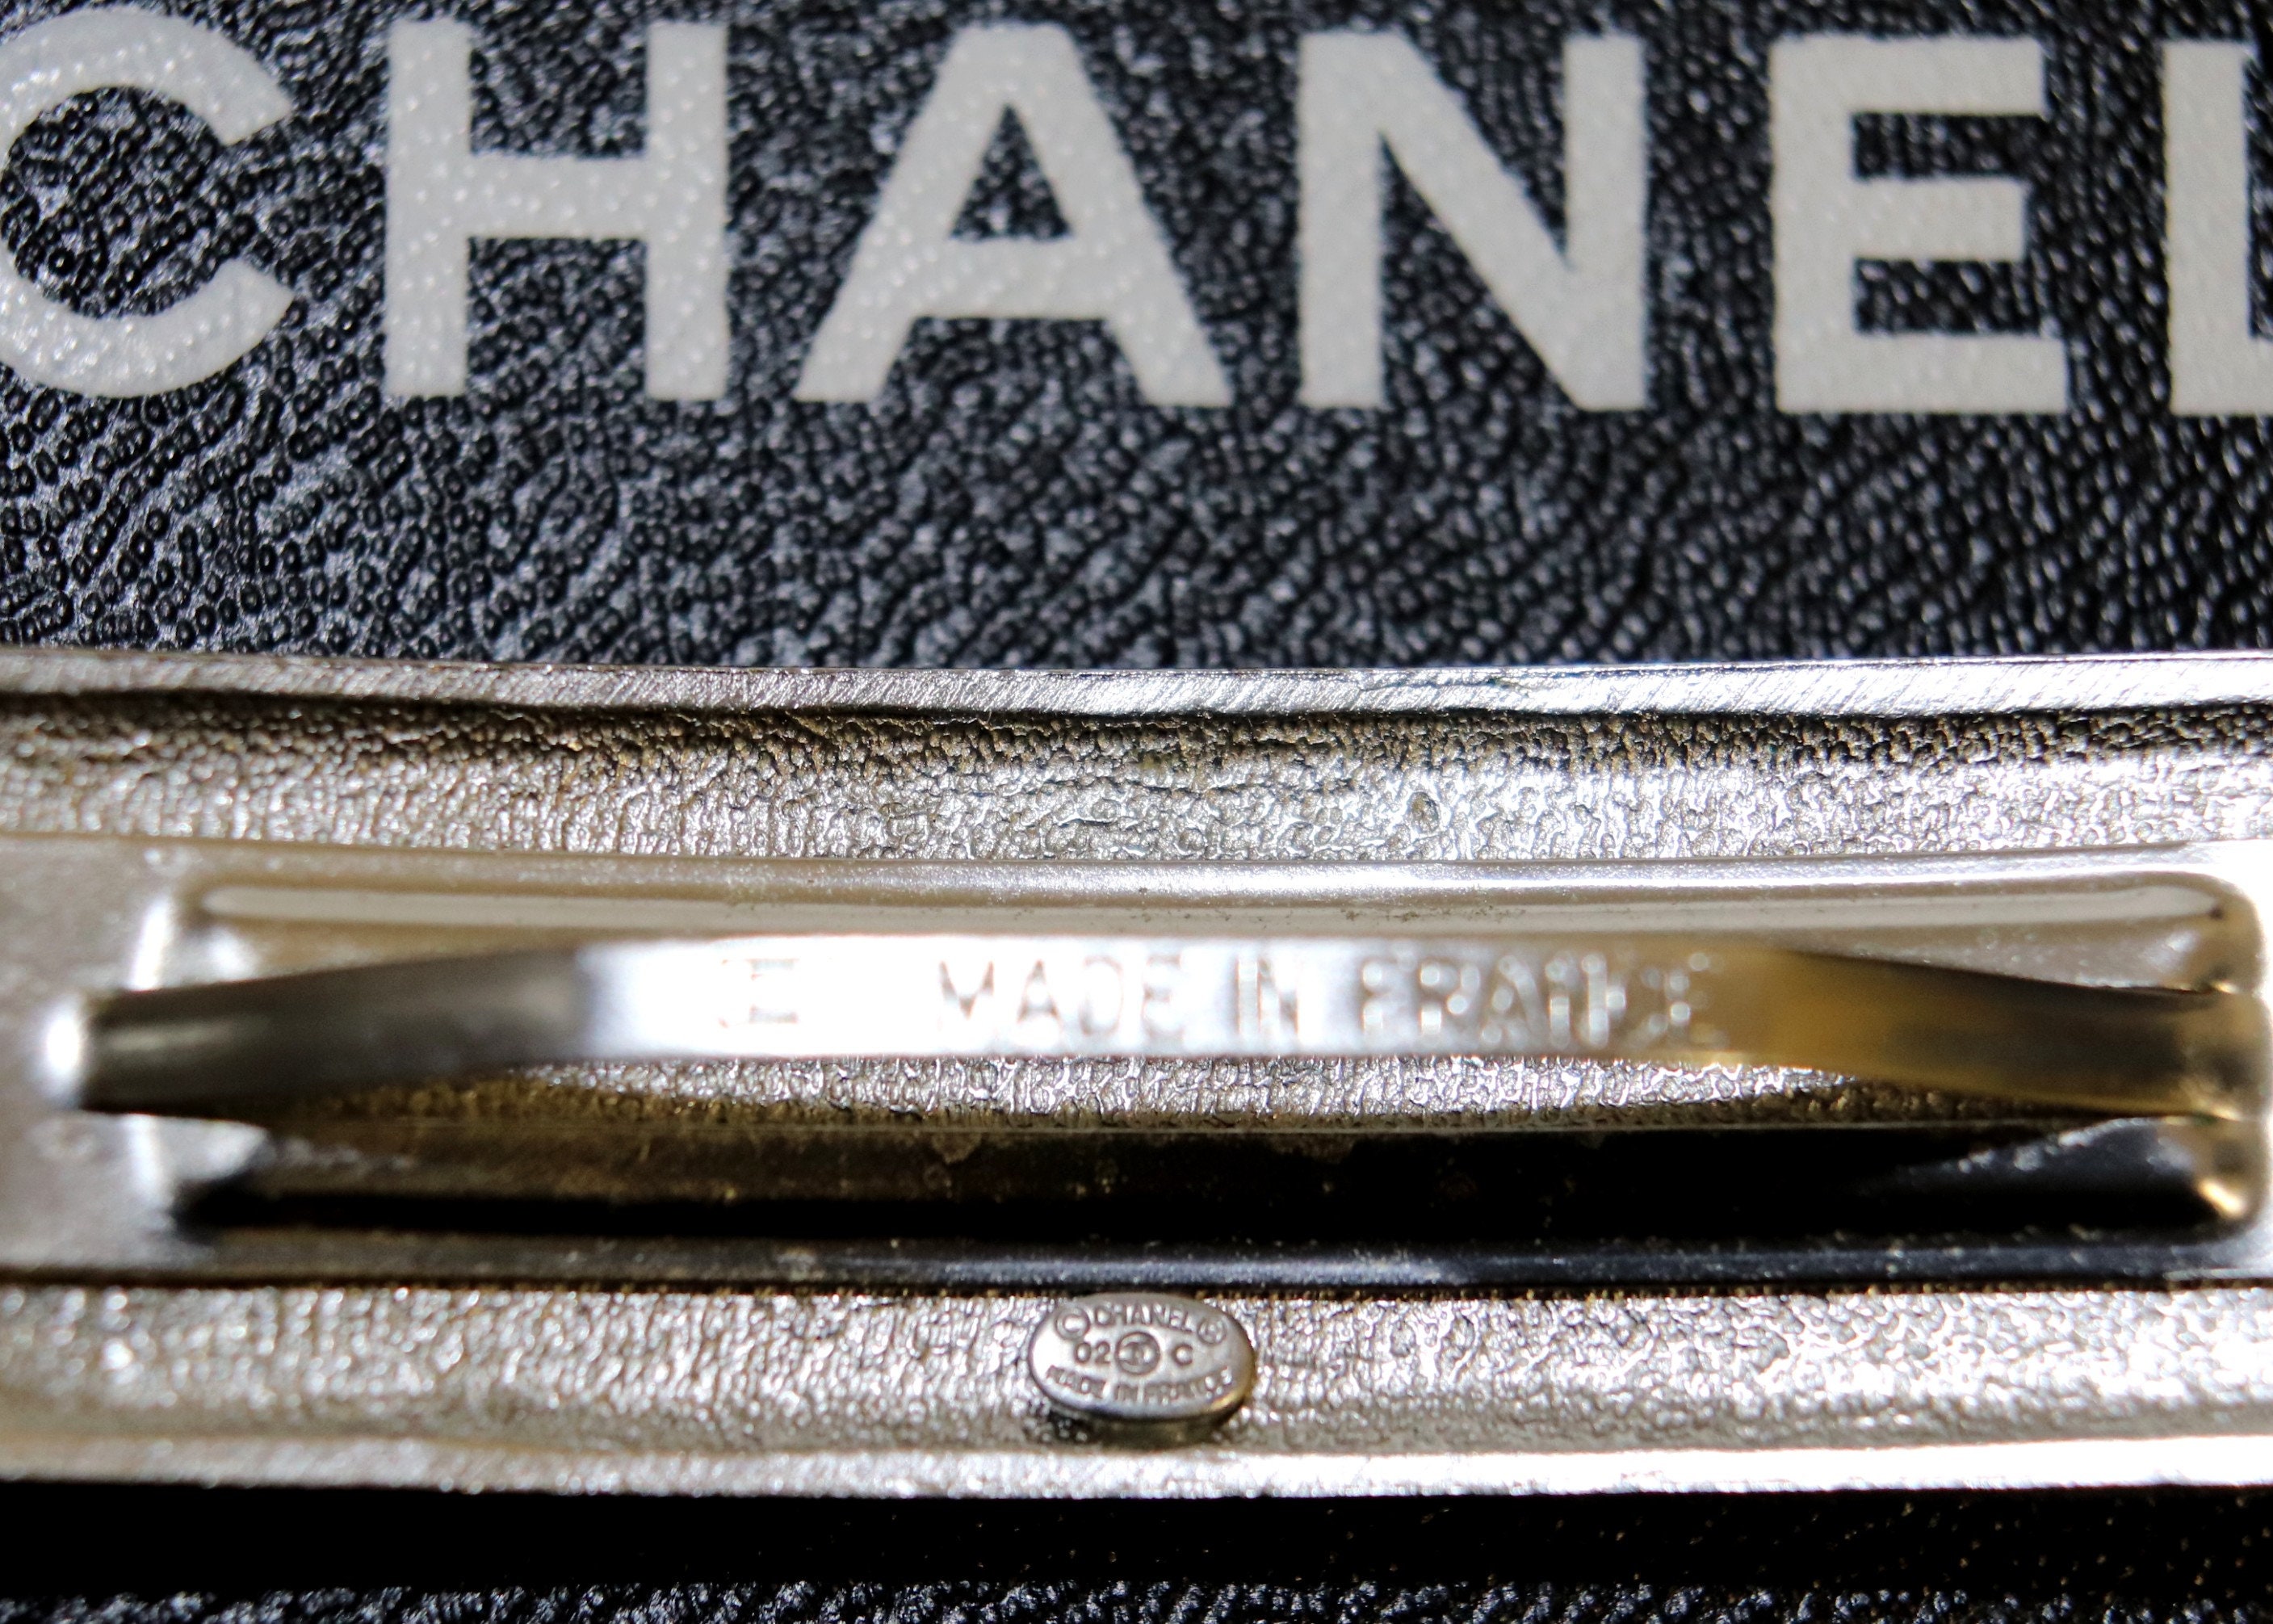 CHANEL Barrette Hair Clip Authentic Vintage Chanel COCO Mark 